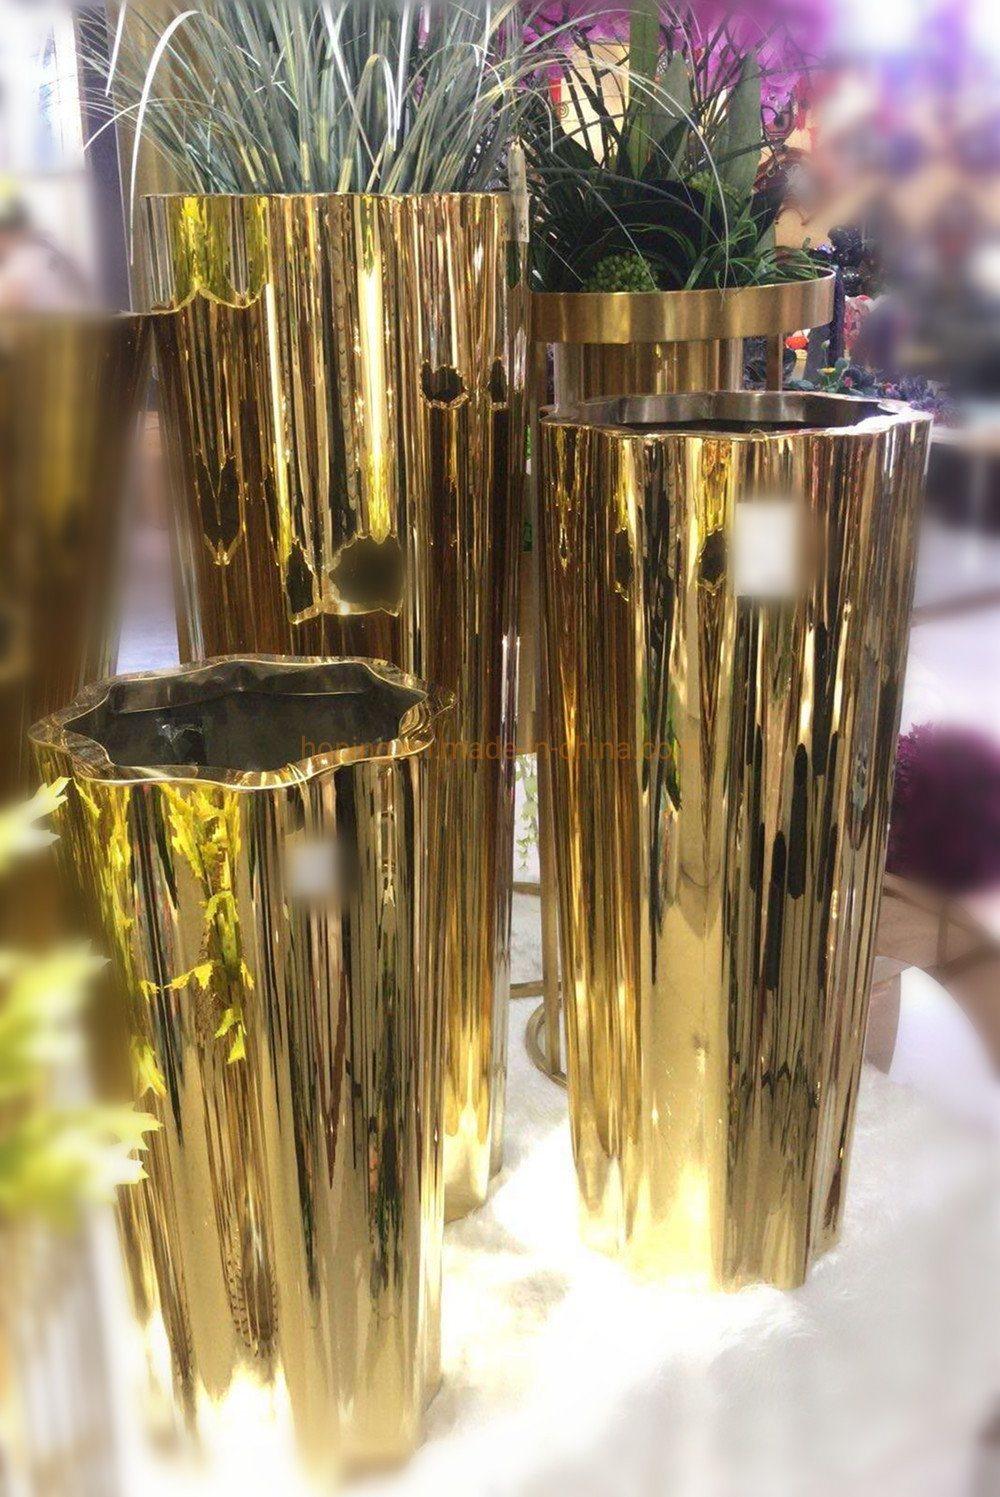 90 High Table Luxury Decoration Wedding Golden Stainless Steel Flower Stands Pedestal Stand